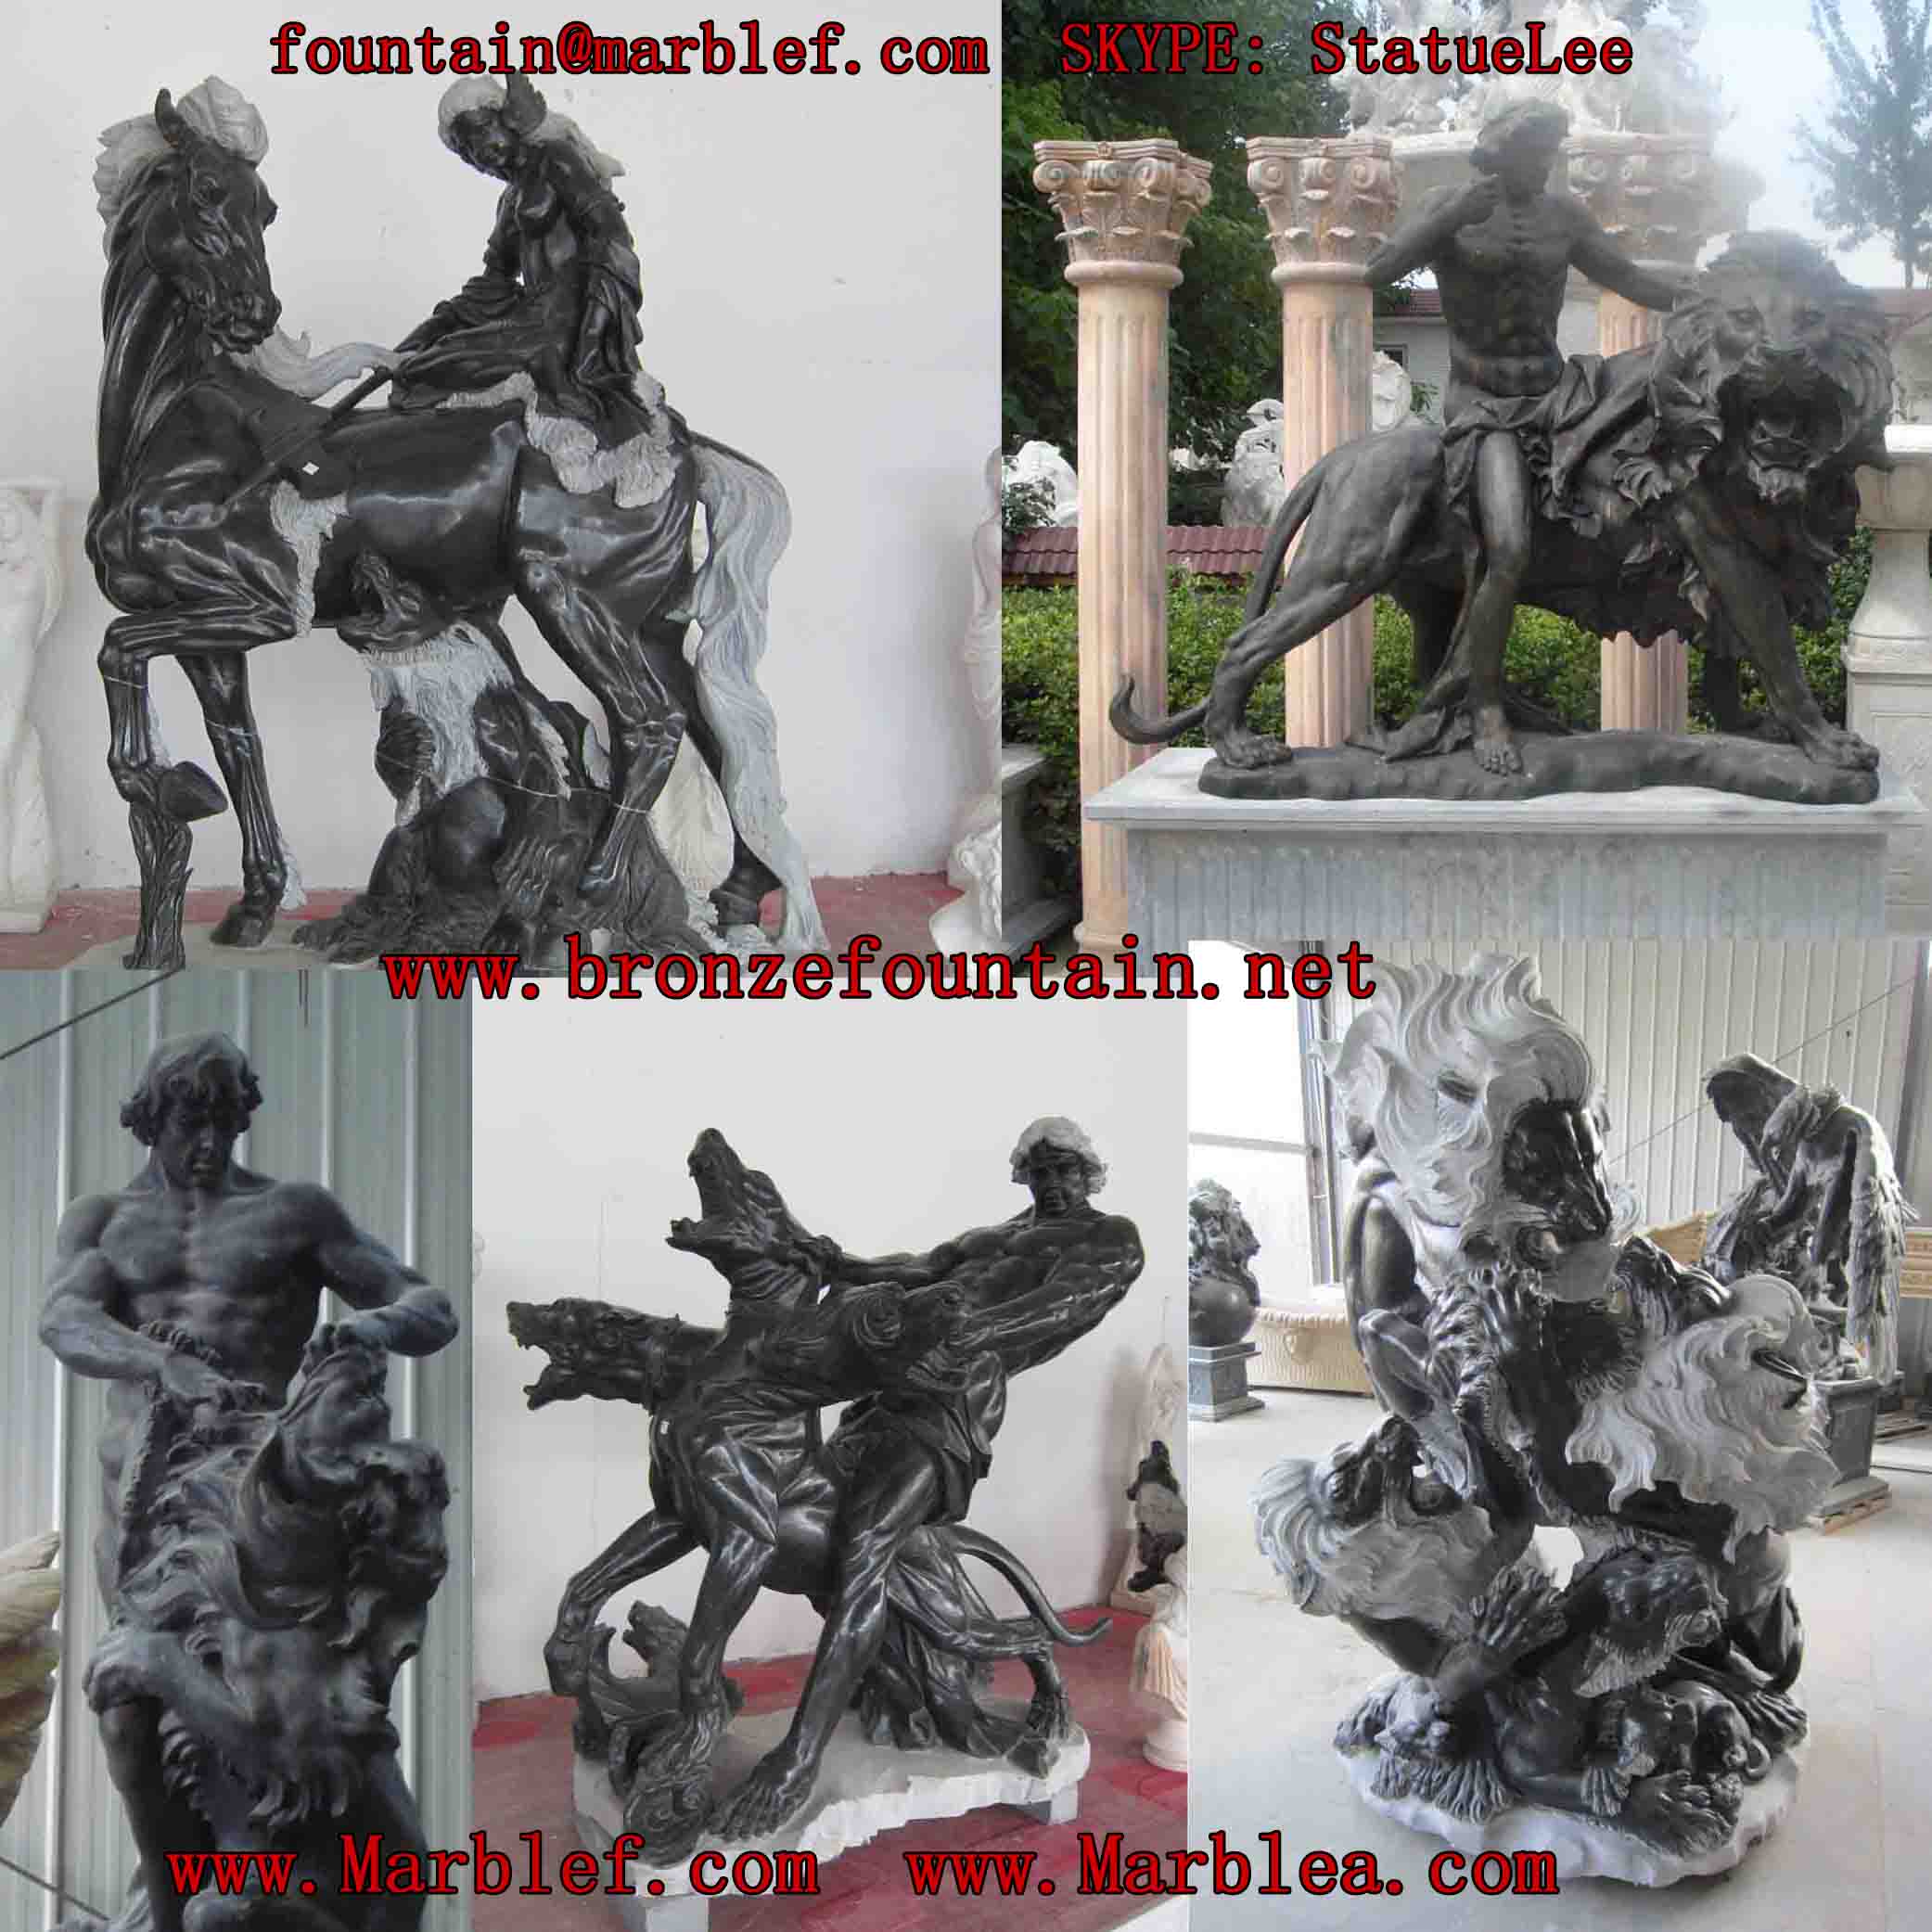 bronze architectural fountains,bronze musical fountains,bronze water fountains